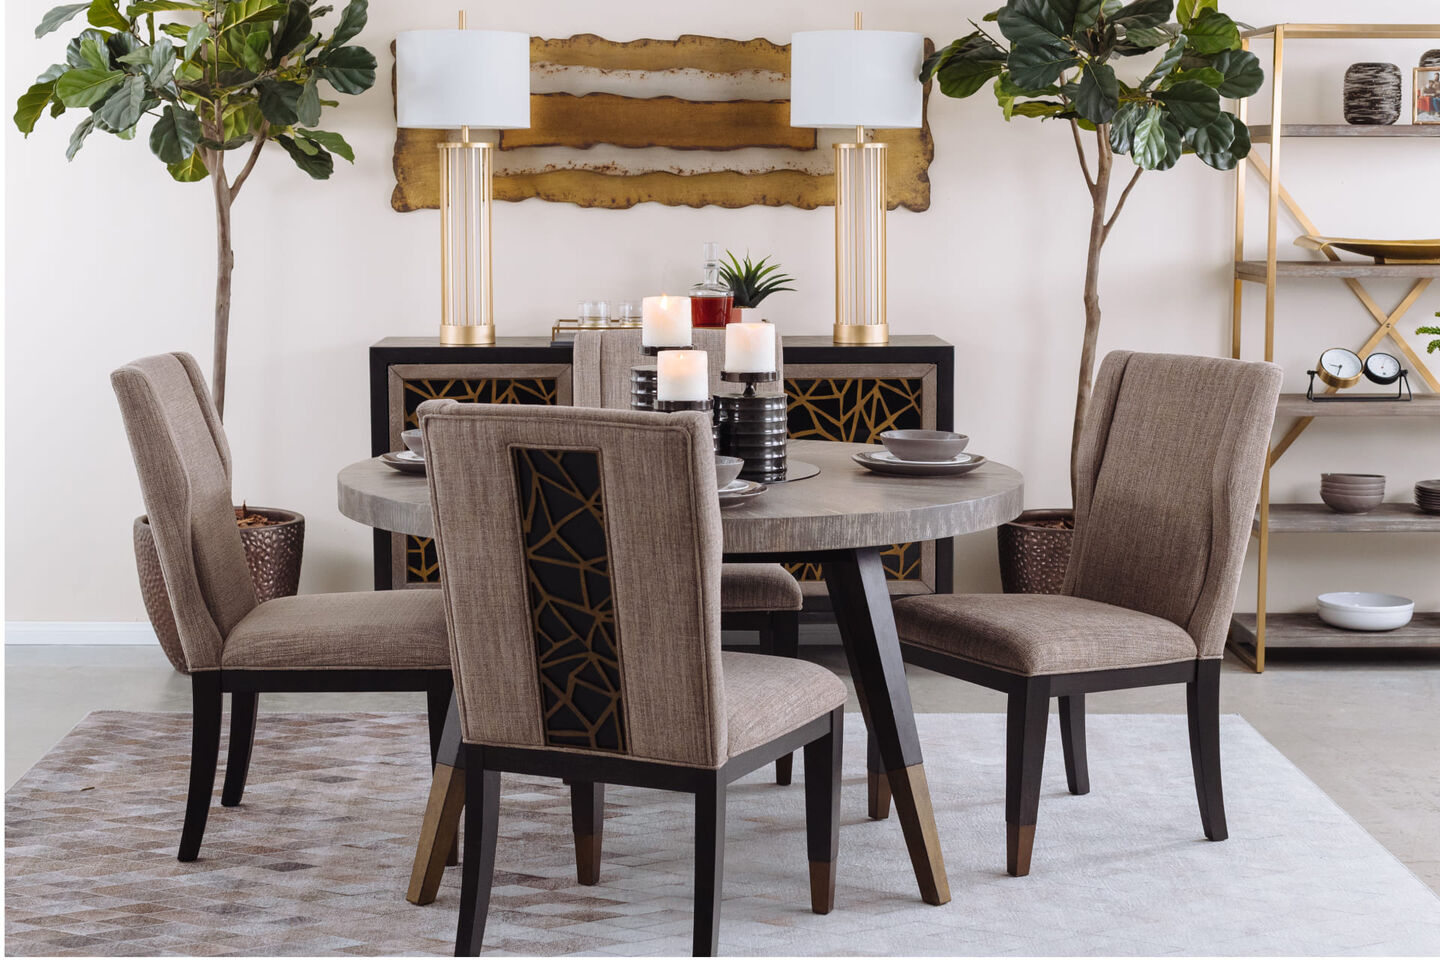 Magnussen Home Ryker Dining Set in Modern Glam Dining Room